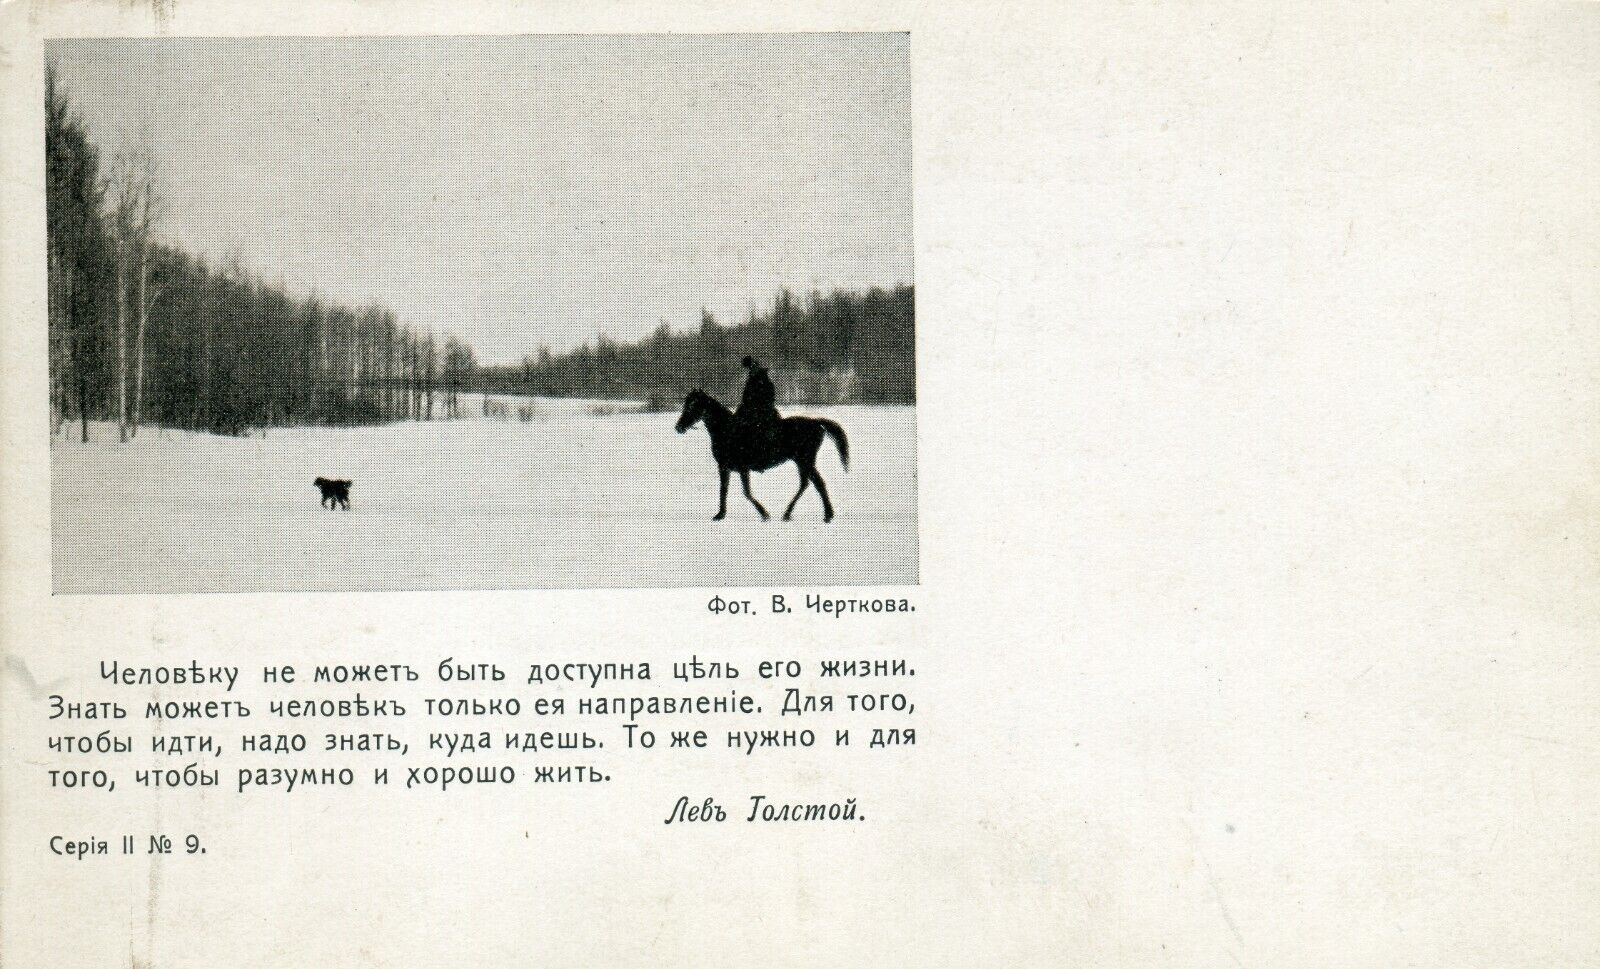 RRR Photo Leo Tolstoy by V. Chertkov, 1900s, Lifetime edition. Russian Empire.